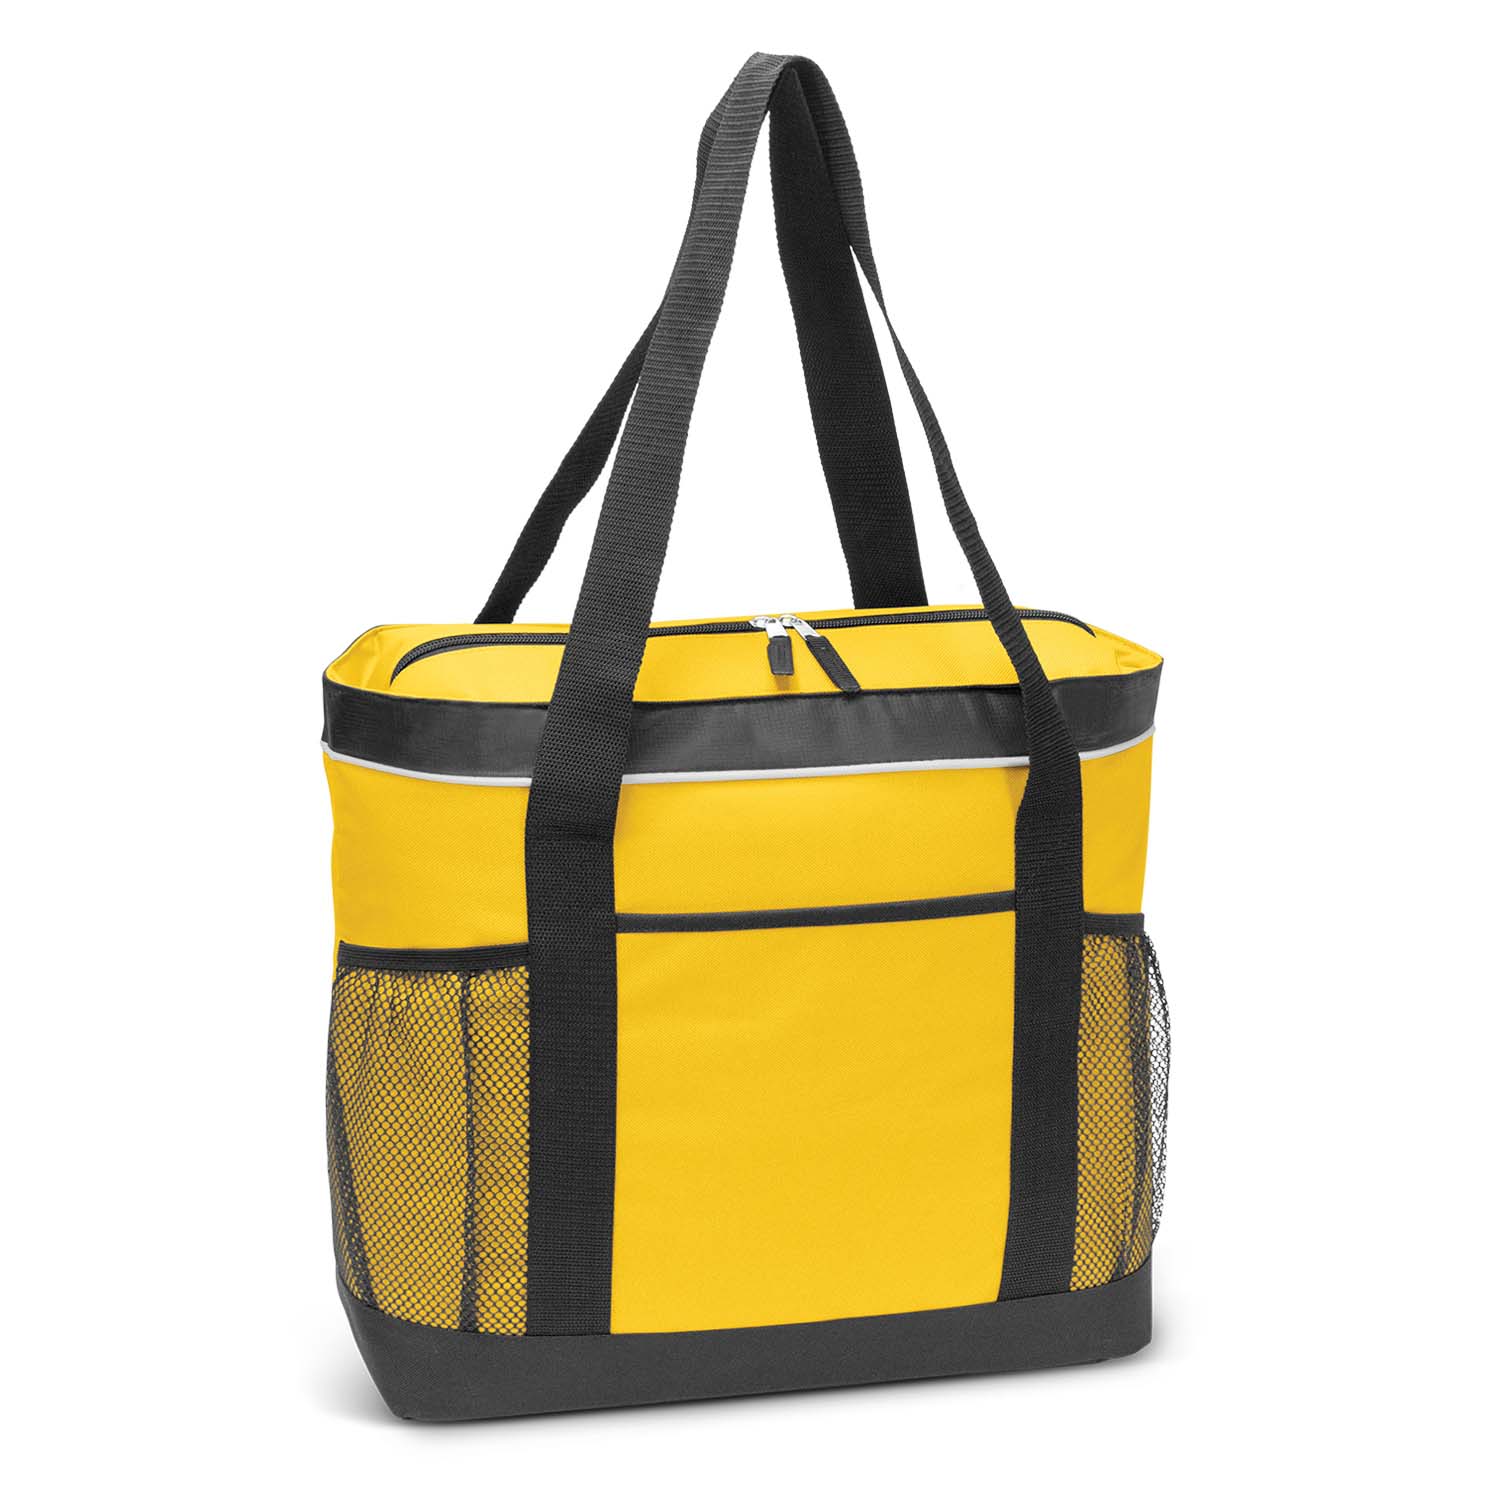 Printed Yellow Zero Cooler Tote Bags in Australia